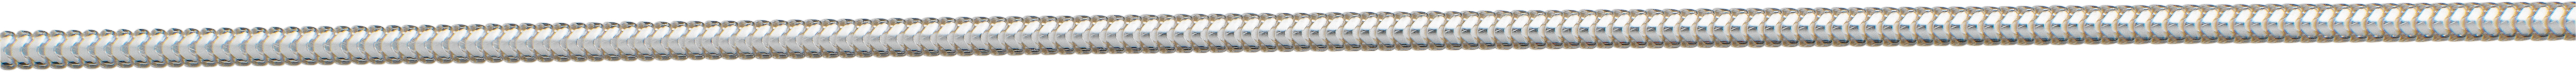 Snake chain silver 925/- Ø 1,60mm